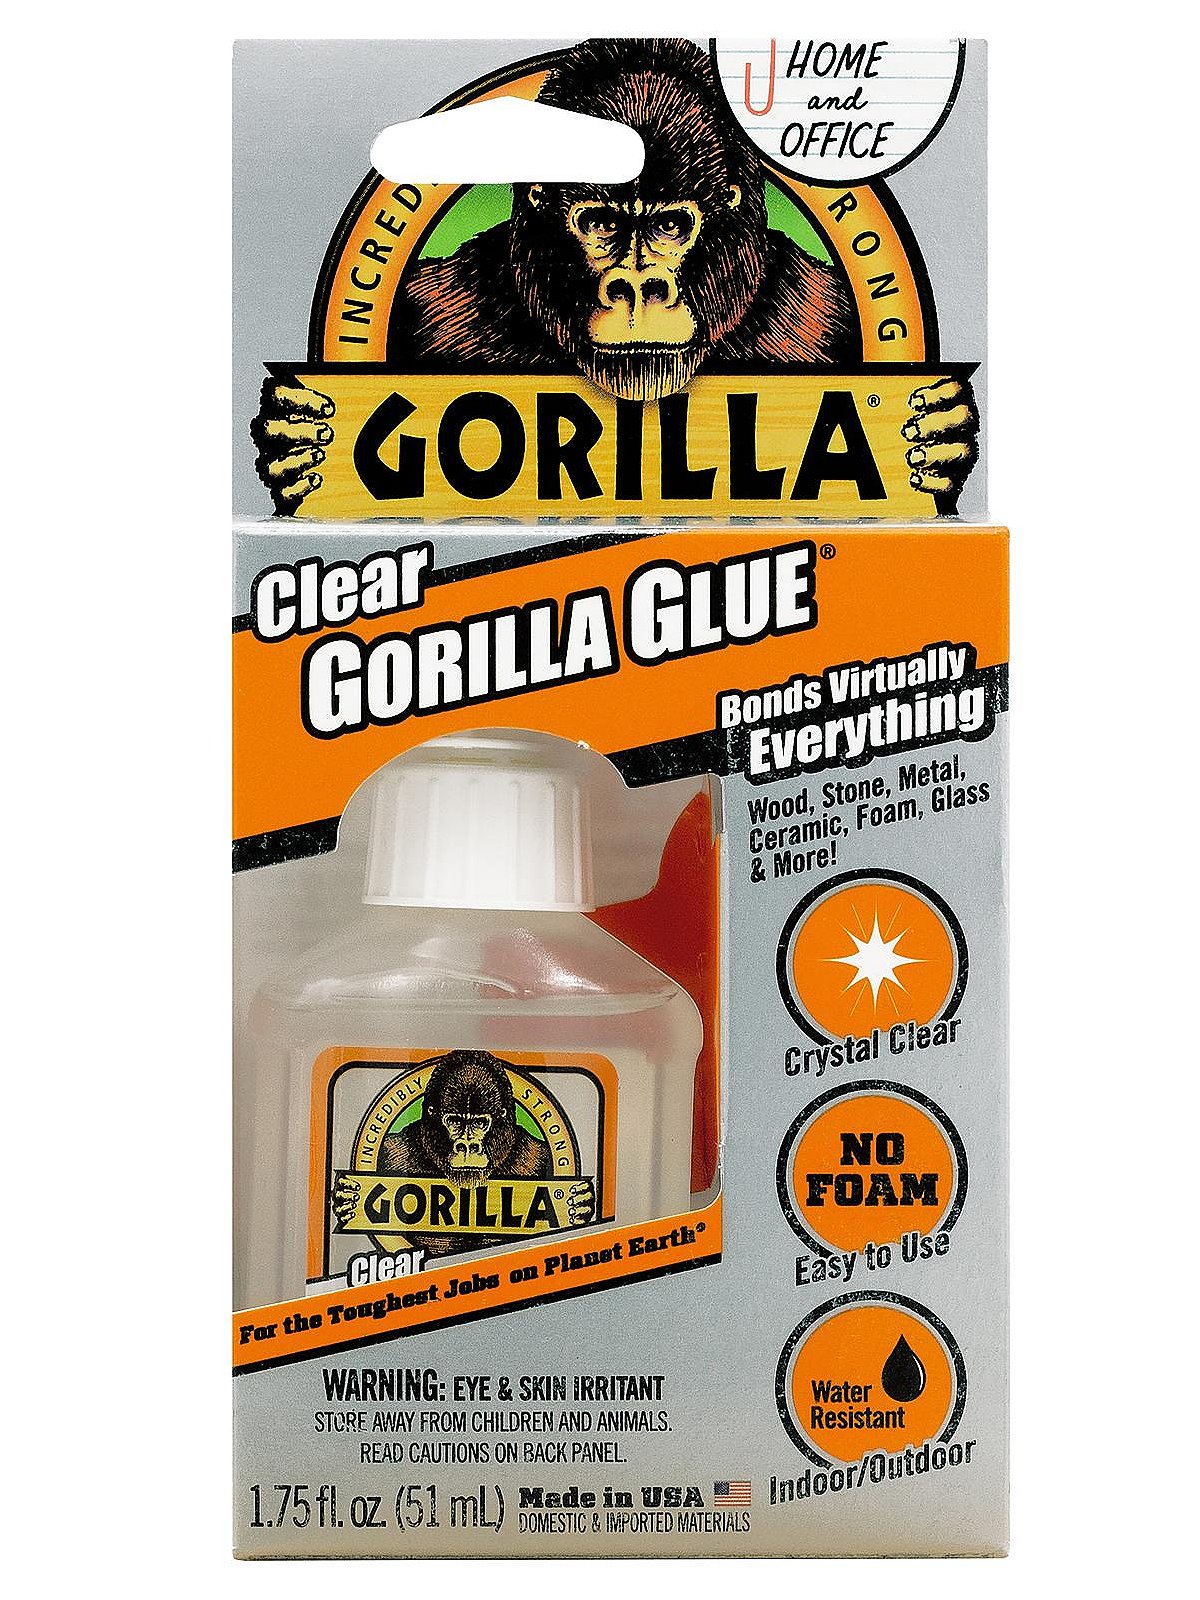 Gorilla Glue - Crystal Clear Gorilla Tape - Murdoch's